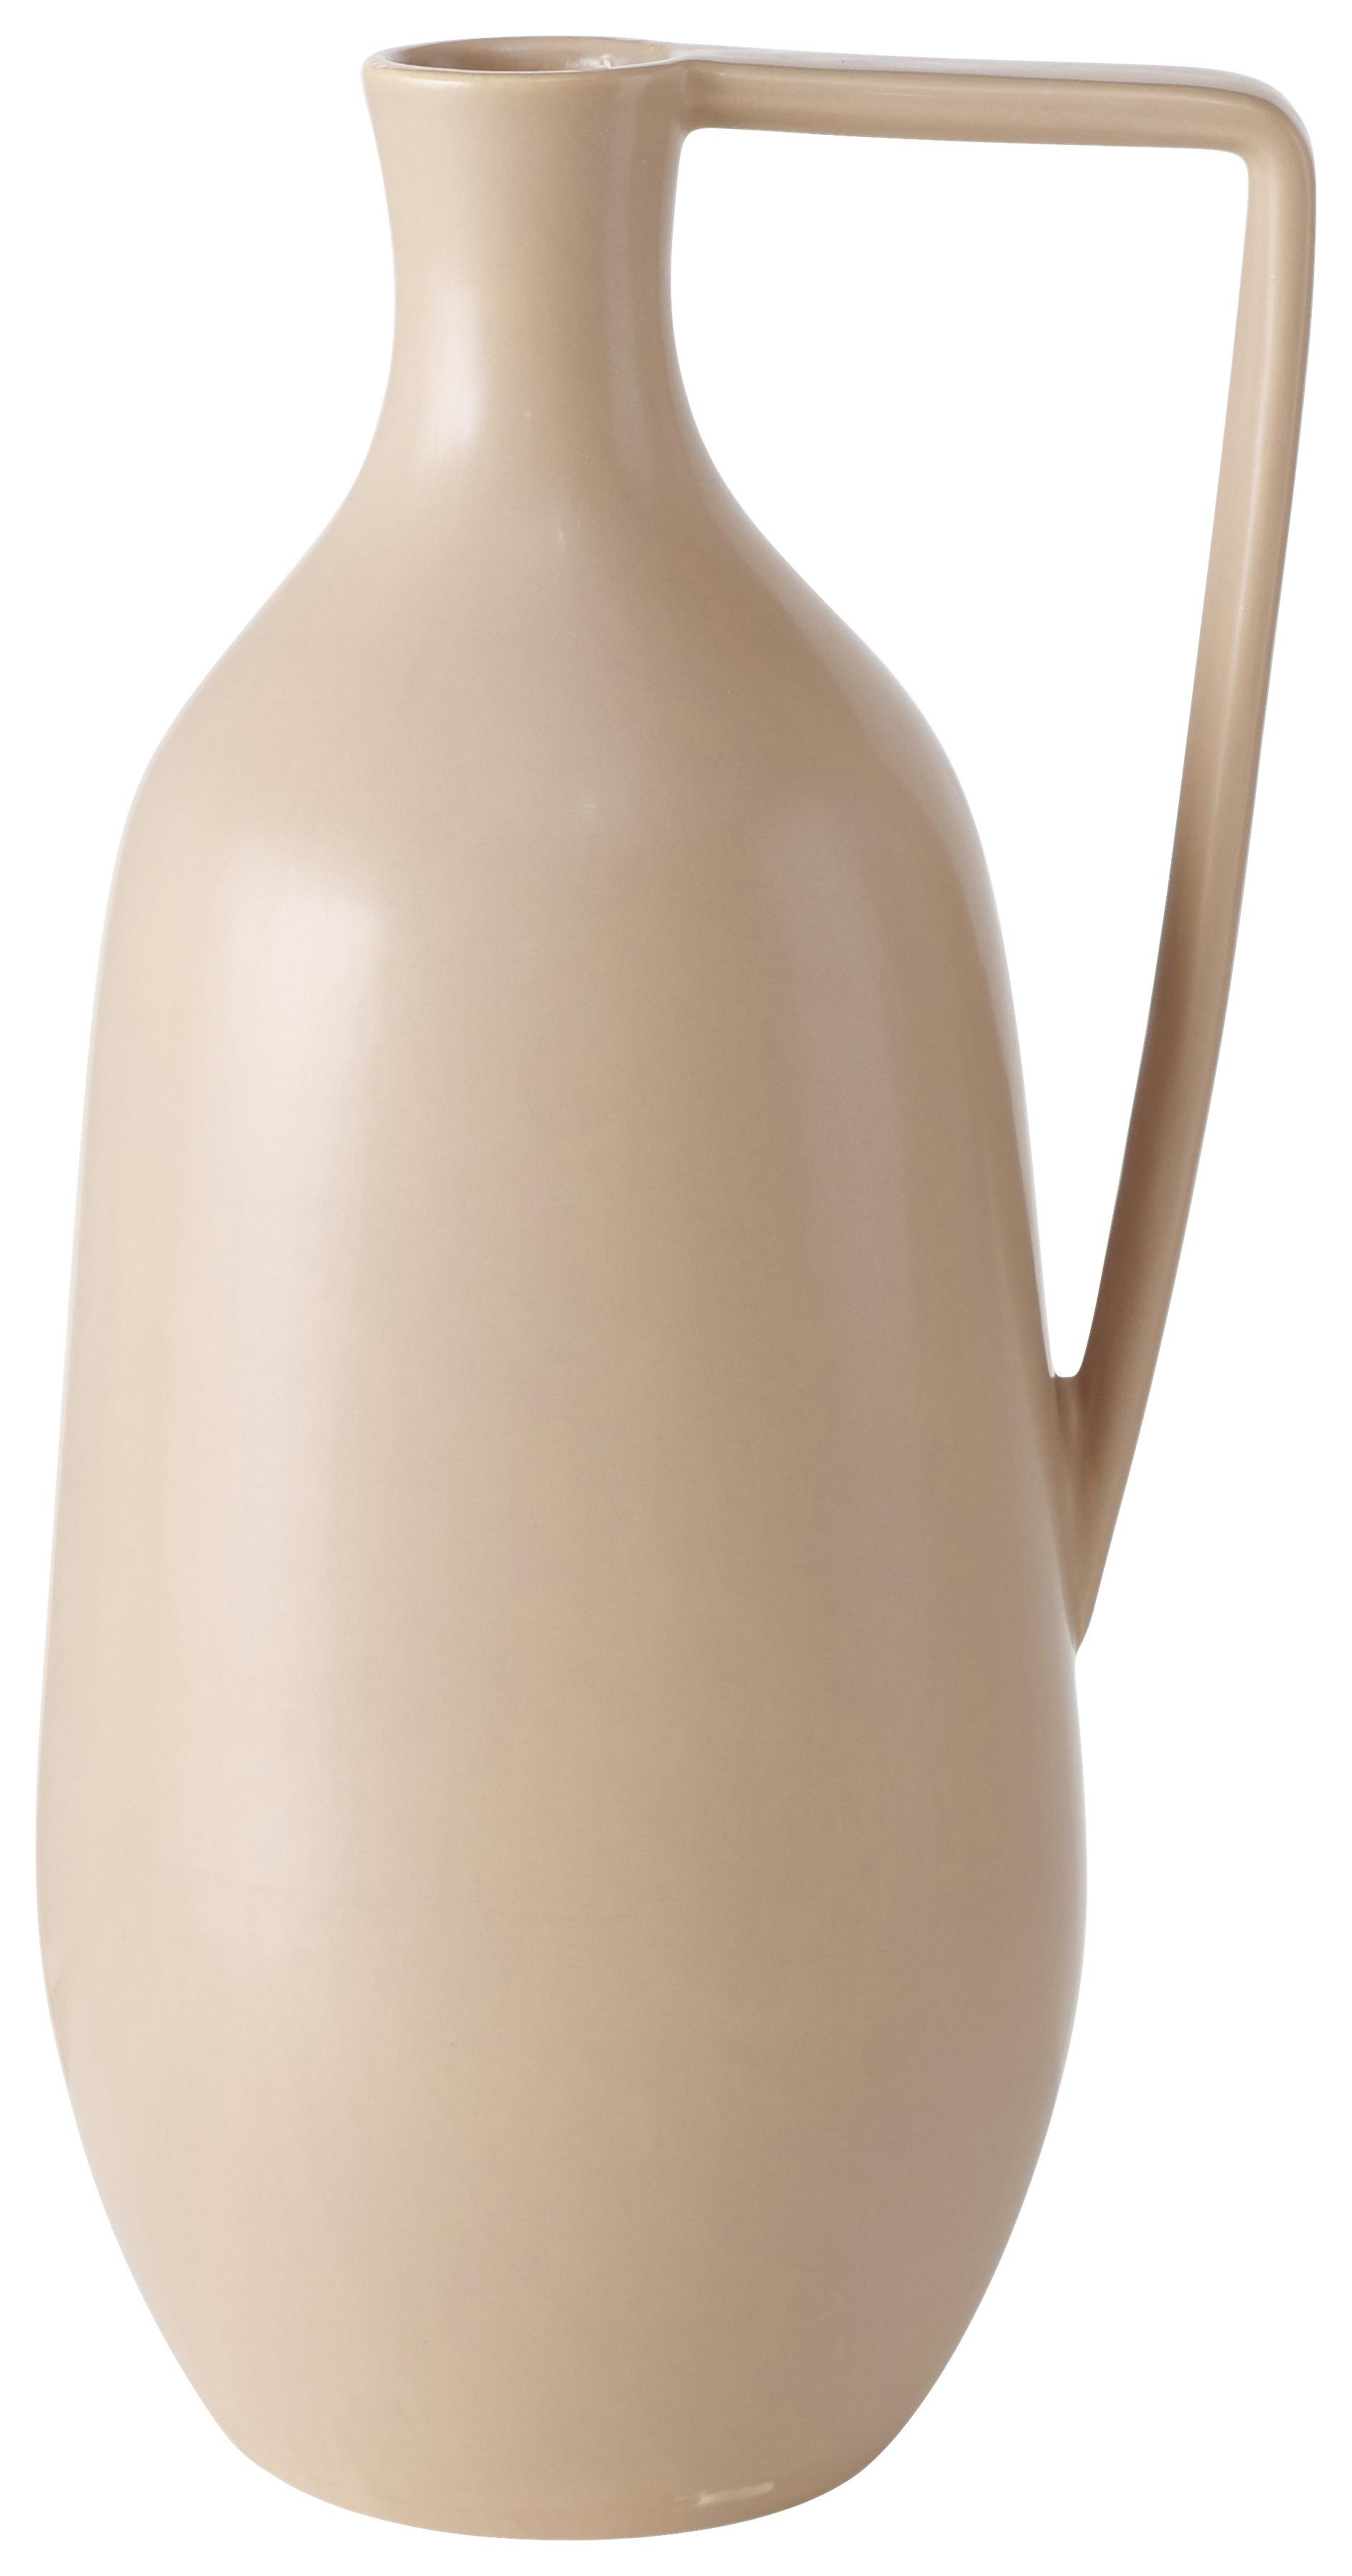 Vaza Naimo I -Paz- - svetlo rjava, Moderno, keramika (16/36cm)